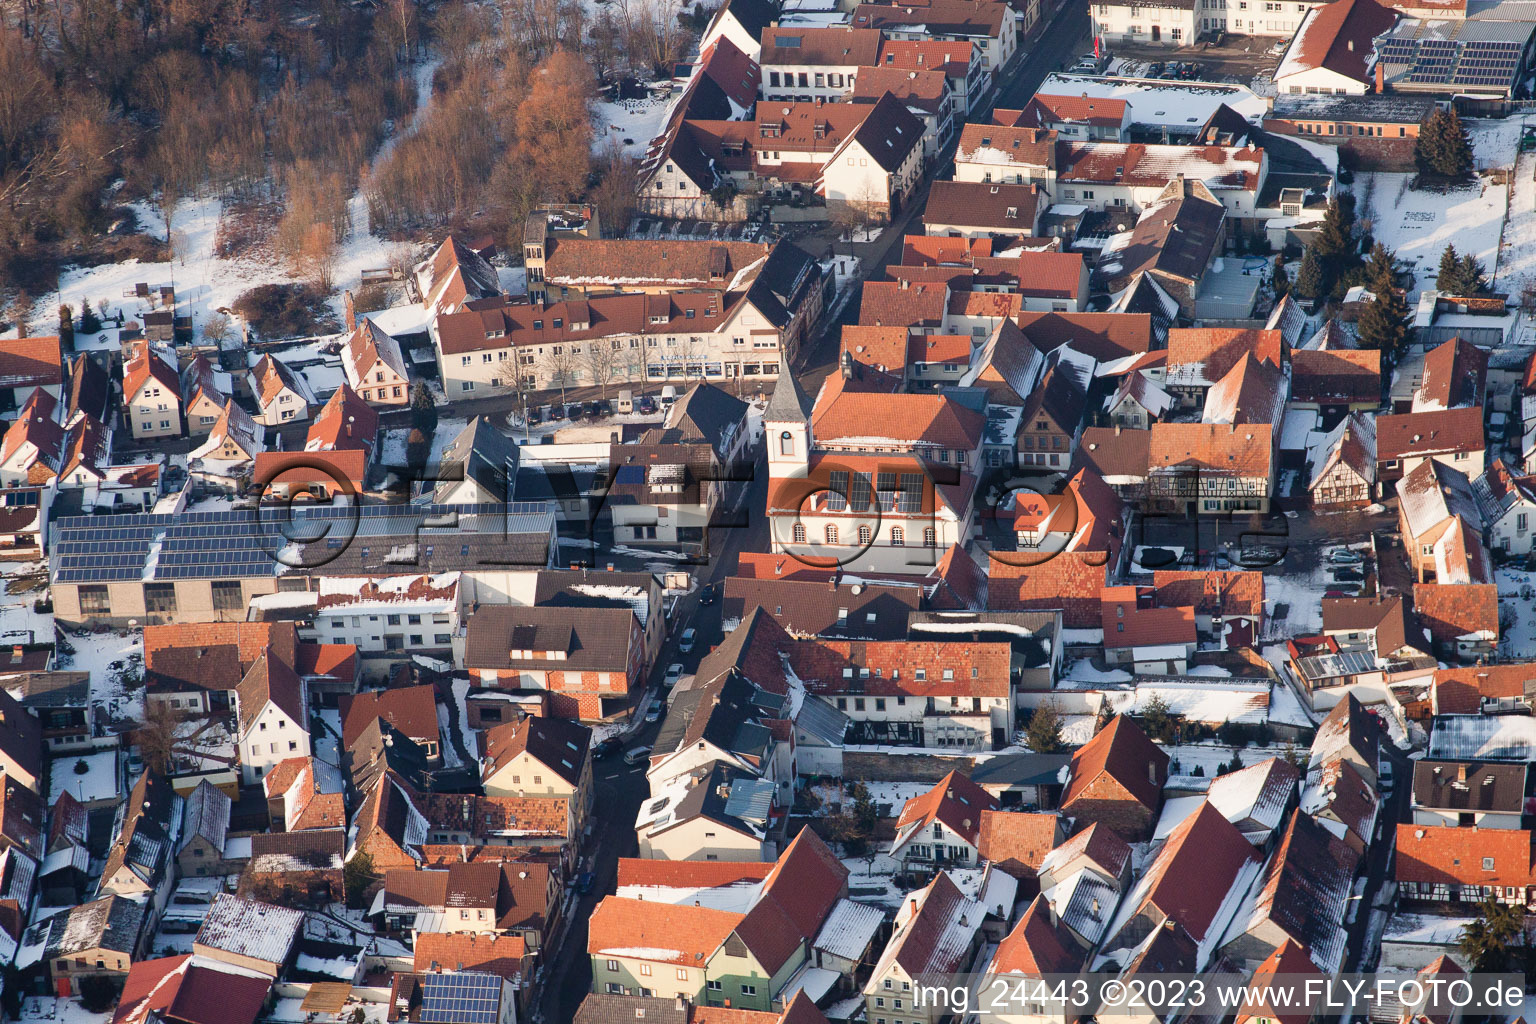 Aerial photograpy of District Ingenheim in Billigheim-Ingenheim in the state Rhineland-Palatinate, Germany